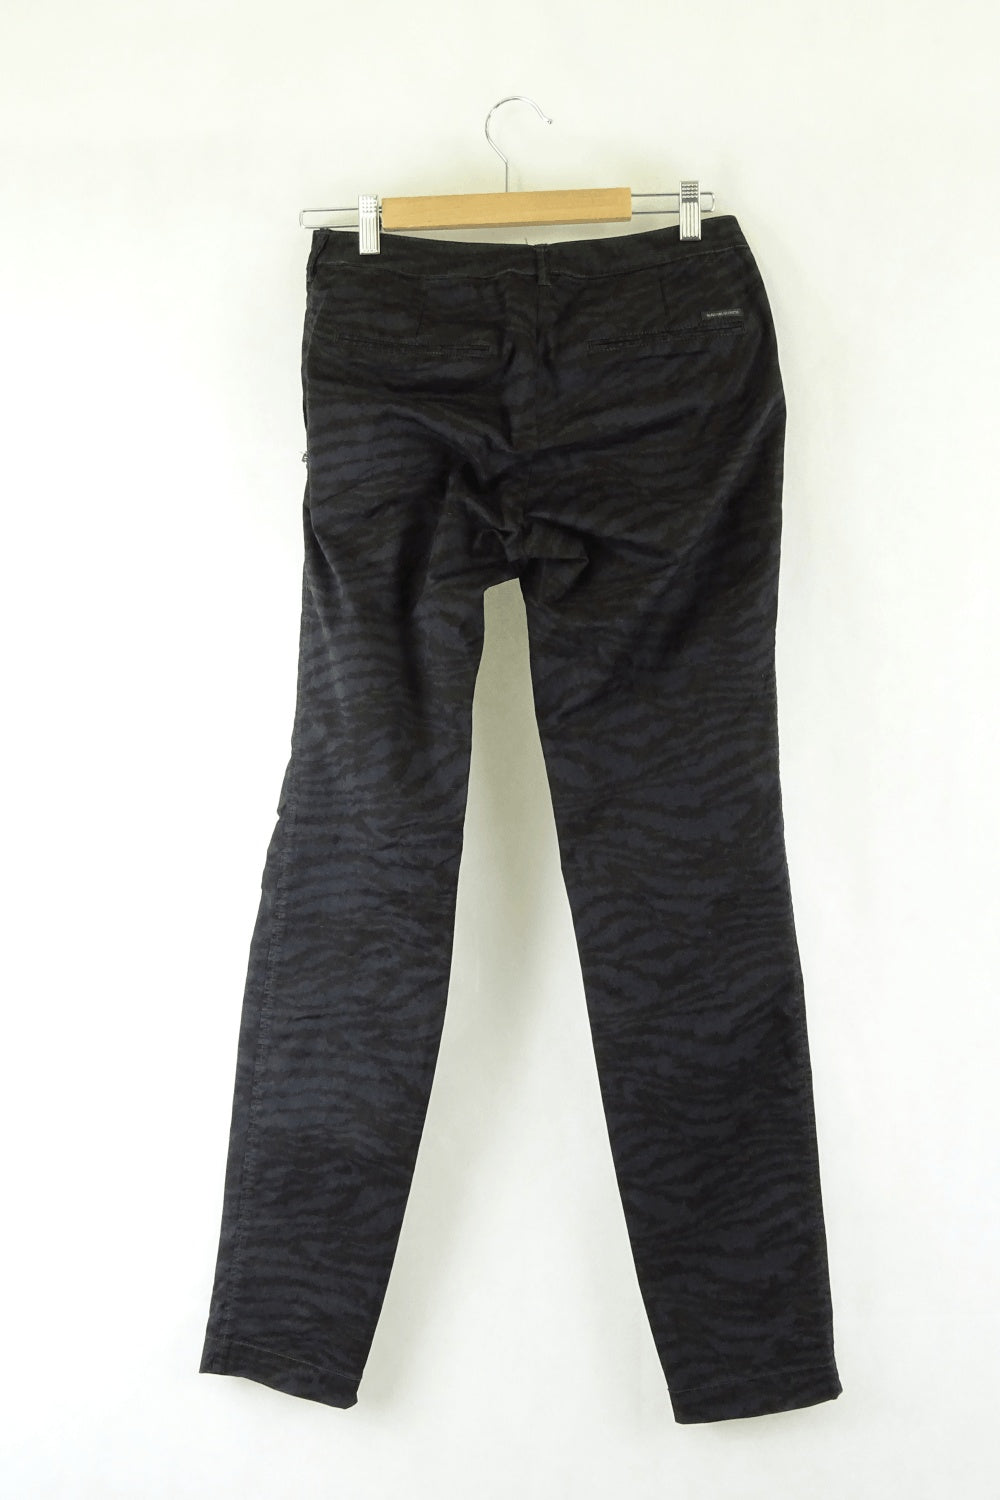 Lululemon Grey Pattern Leggings 12 - Reluv Clothing Australia